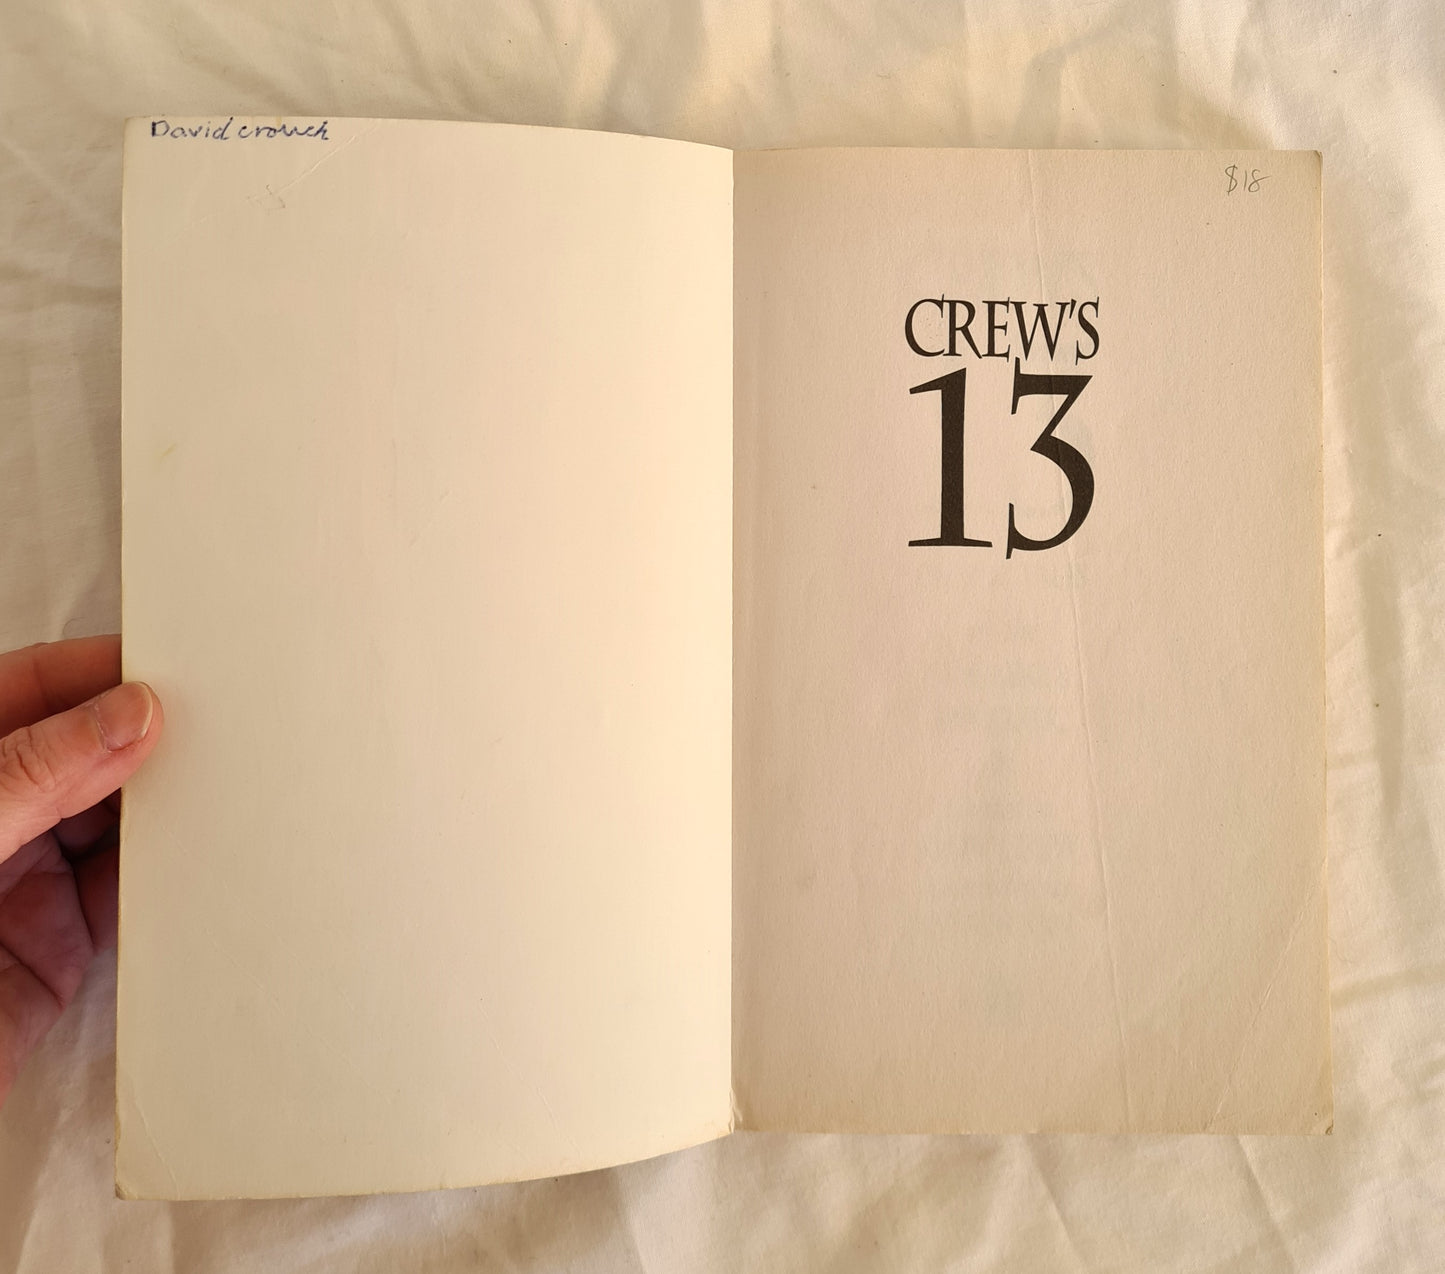 Crew’s 13 by Gary Crew